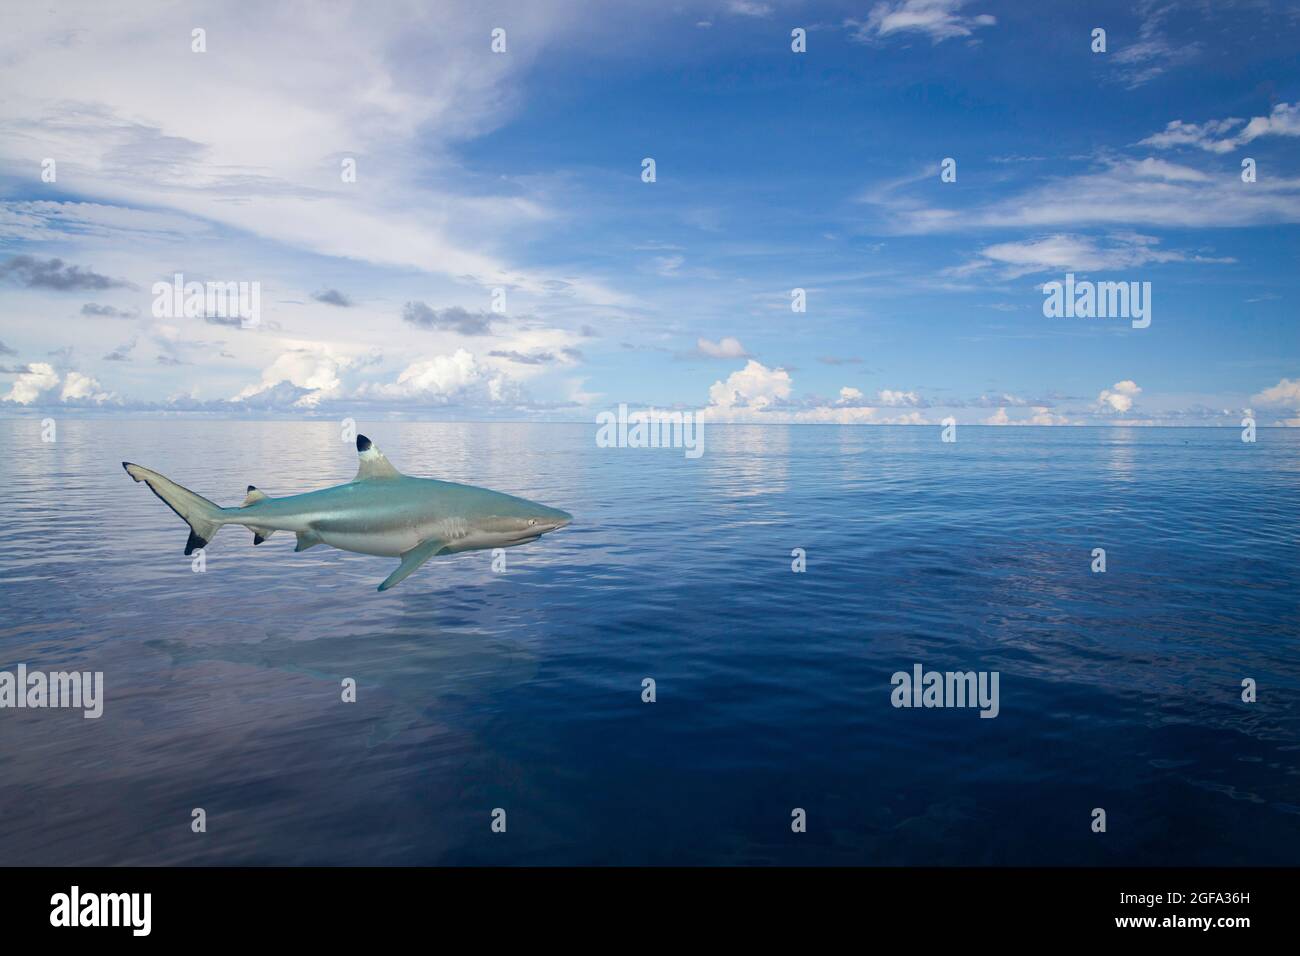 A blacktip reef shark, Carcharhinus melanopterus, digital illustration picturing the animal defying gravity off the island of Yap, Micronesia where bo Stock Photo